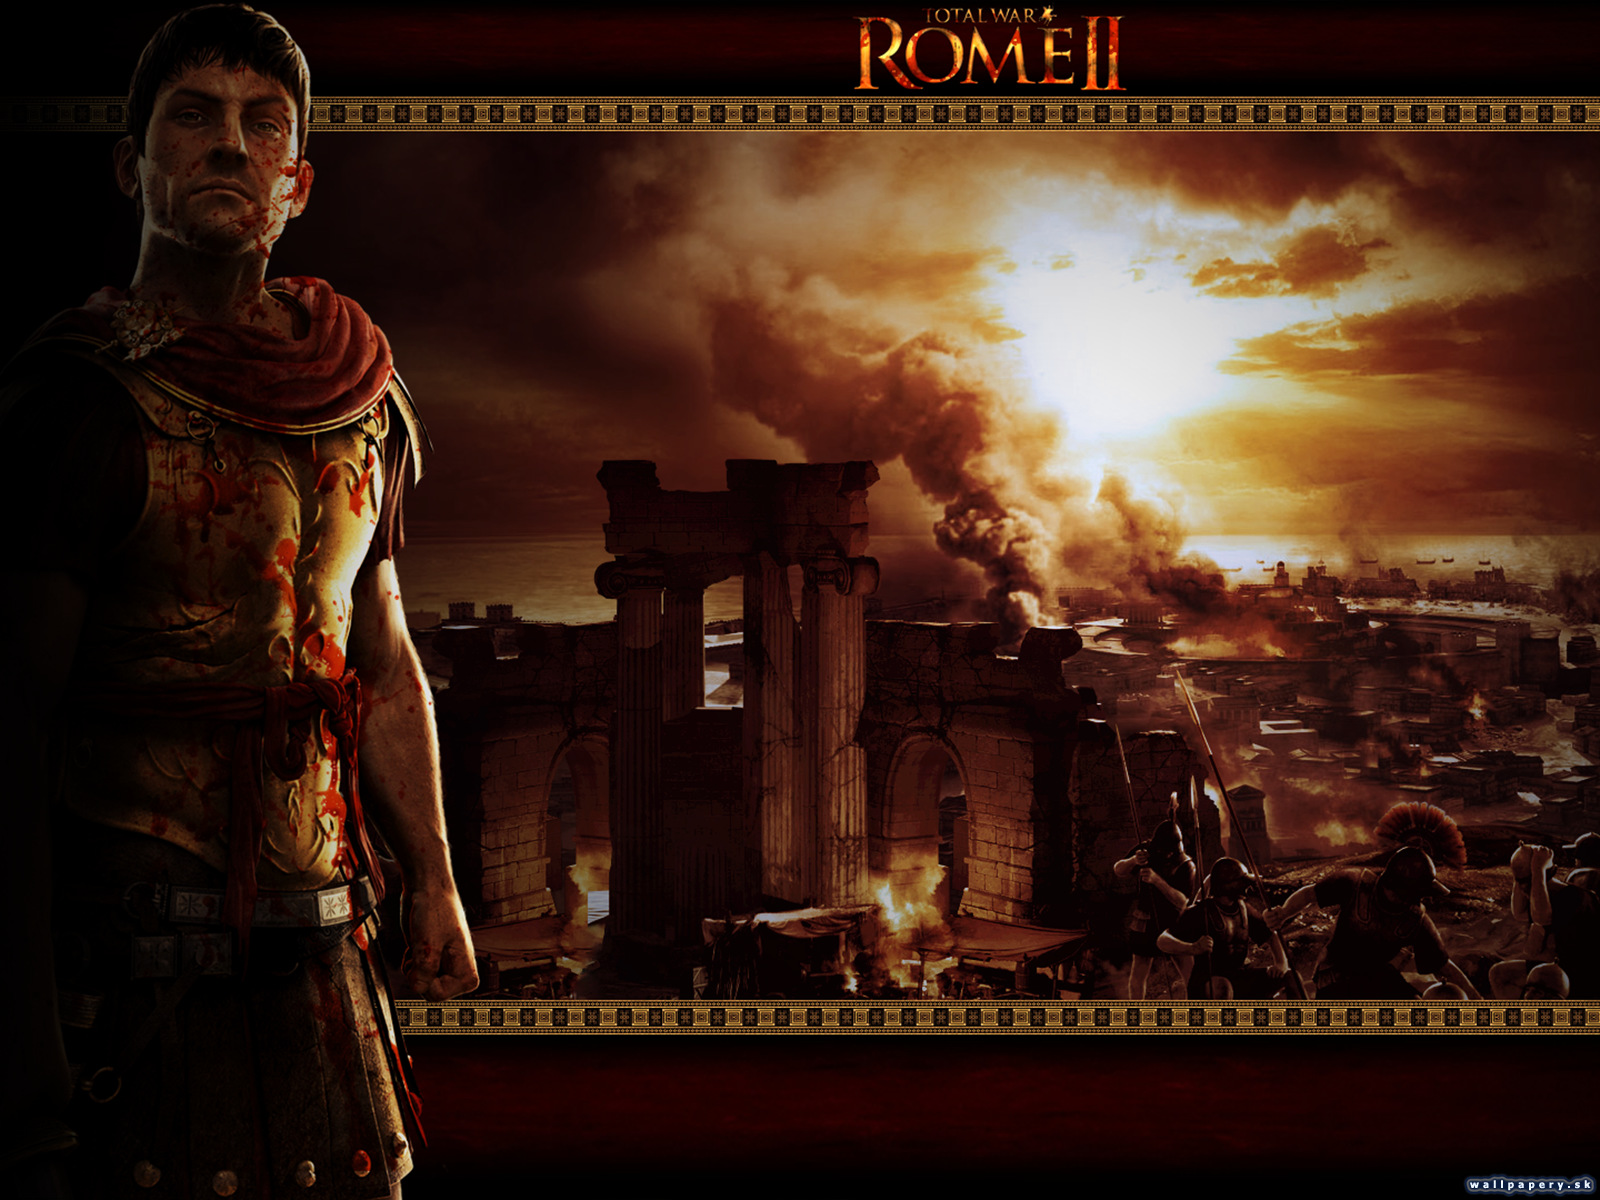 Total War: Rome II - wallpaper 7